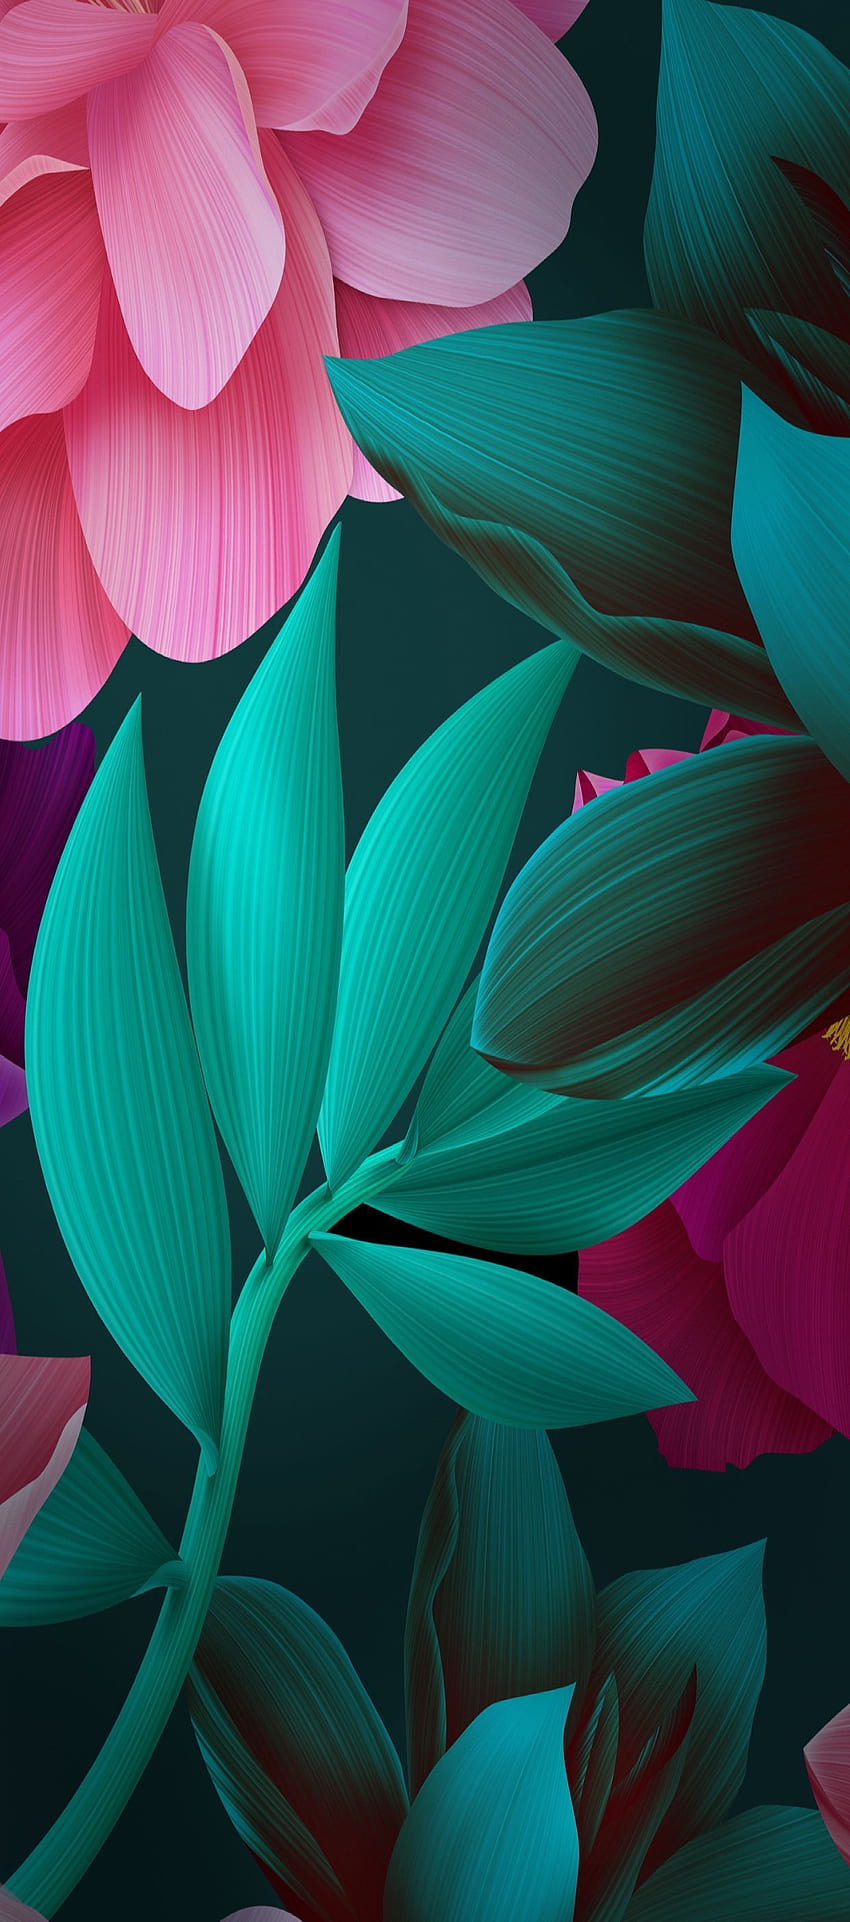 iOS 11, iPhone X, verde, negro, rosa, floral, planta, simple, abstracto, manzana, iphone 8, limpio, belleza. Duvar kağıtları, Sanatsal baskı, Soyut resimler, Pink Black Minimalist fondo de pantalla del teléfono